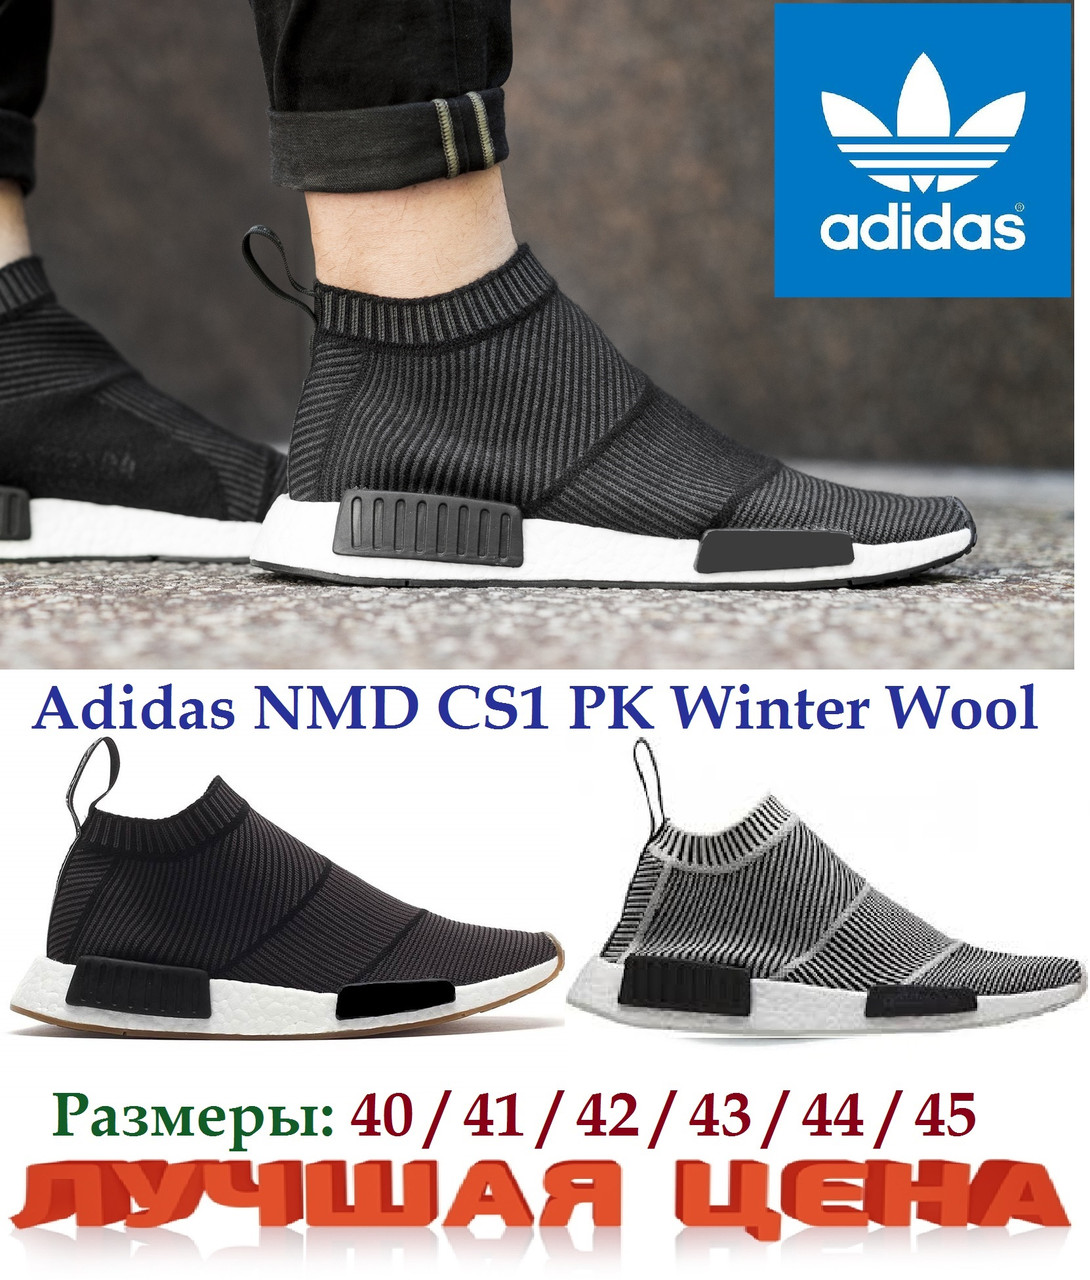 adidas nmd cs1 wool,cheap - OFF 69% -goldenlinetaxiswarwick.co.uk